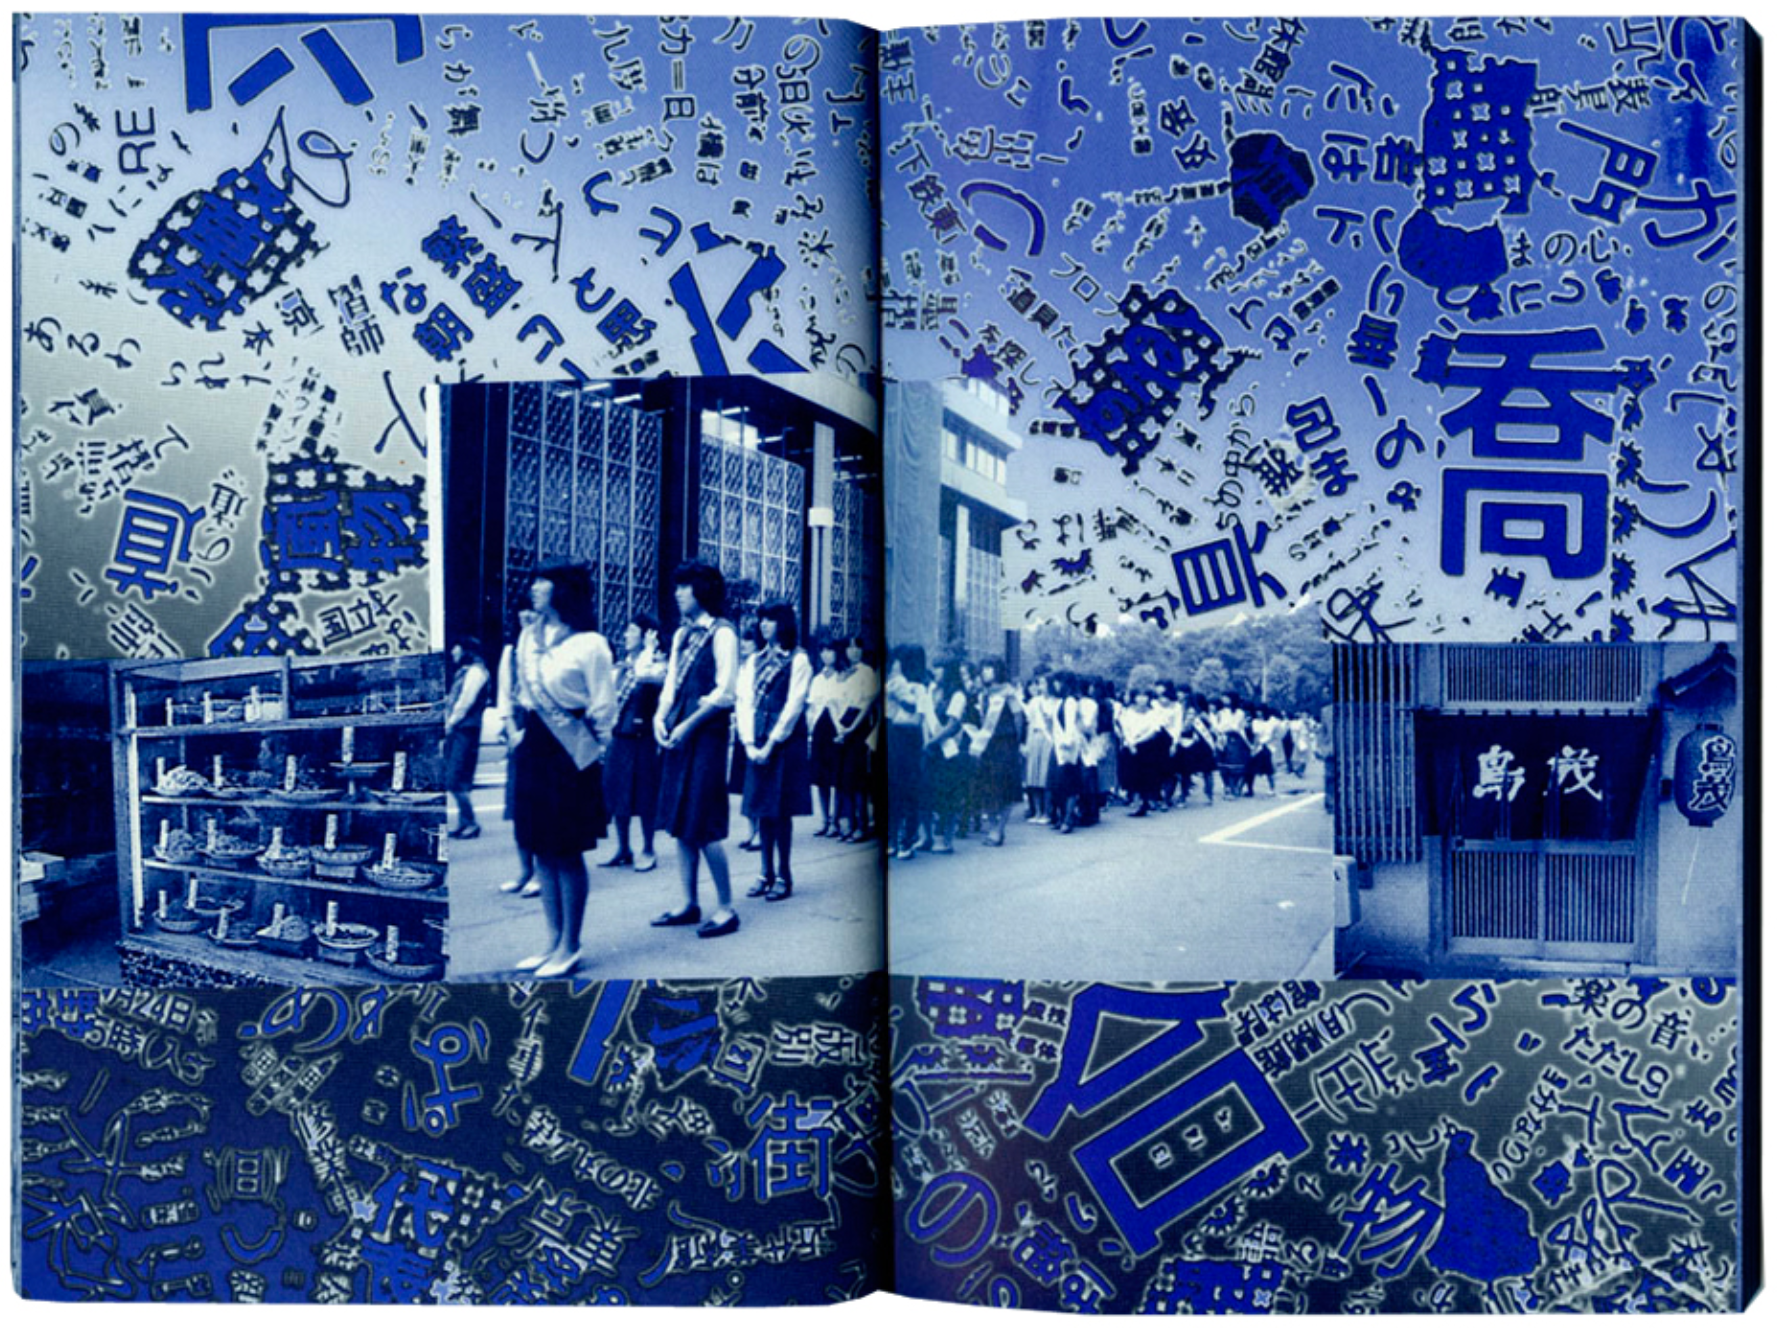 book spread printed in blue